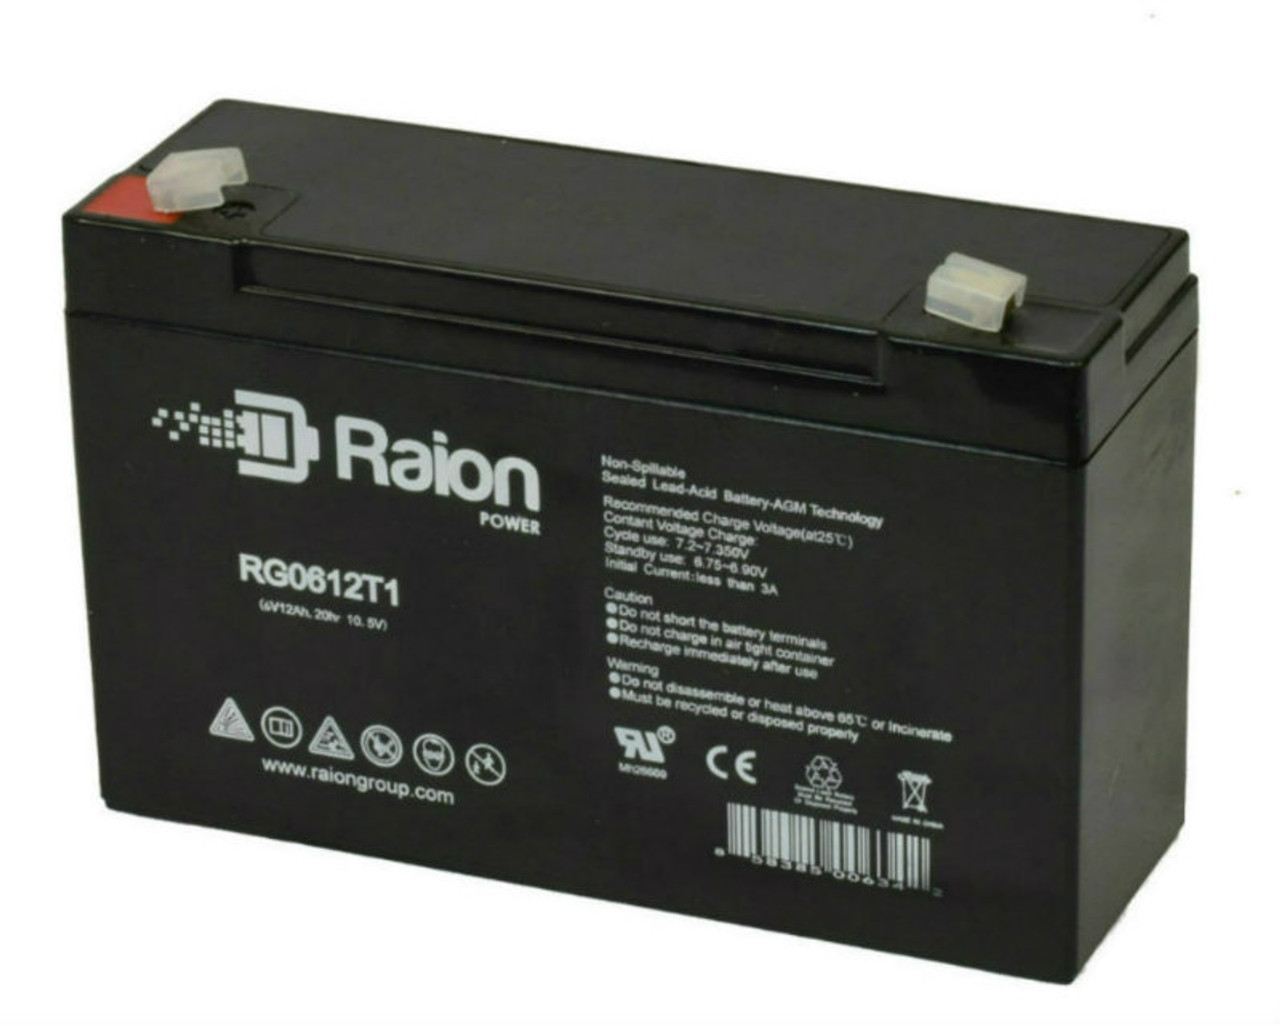 Raion Power RG06120T1 Replacement 6V 12Ah Emergency Light Battery for Elan 1612